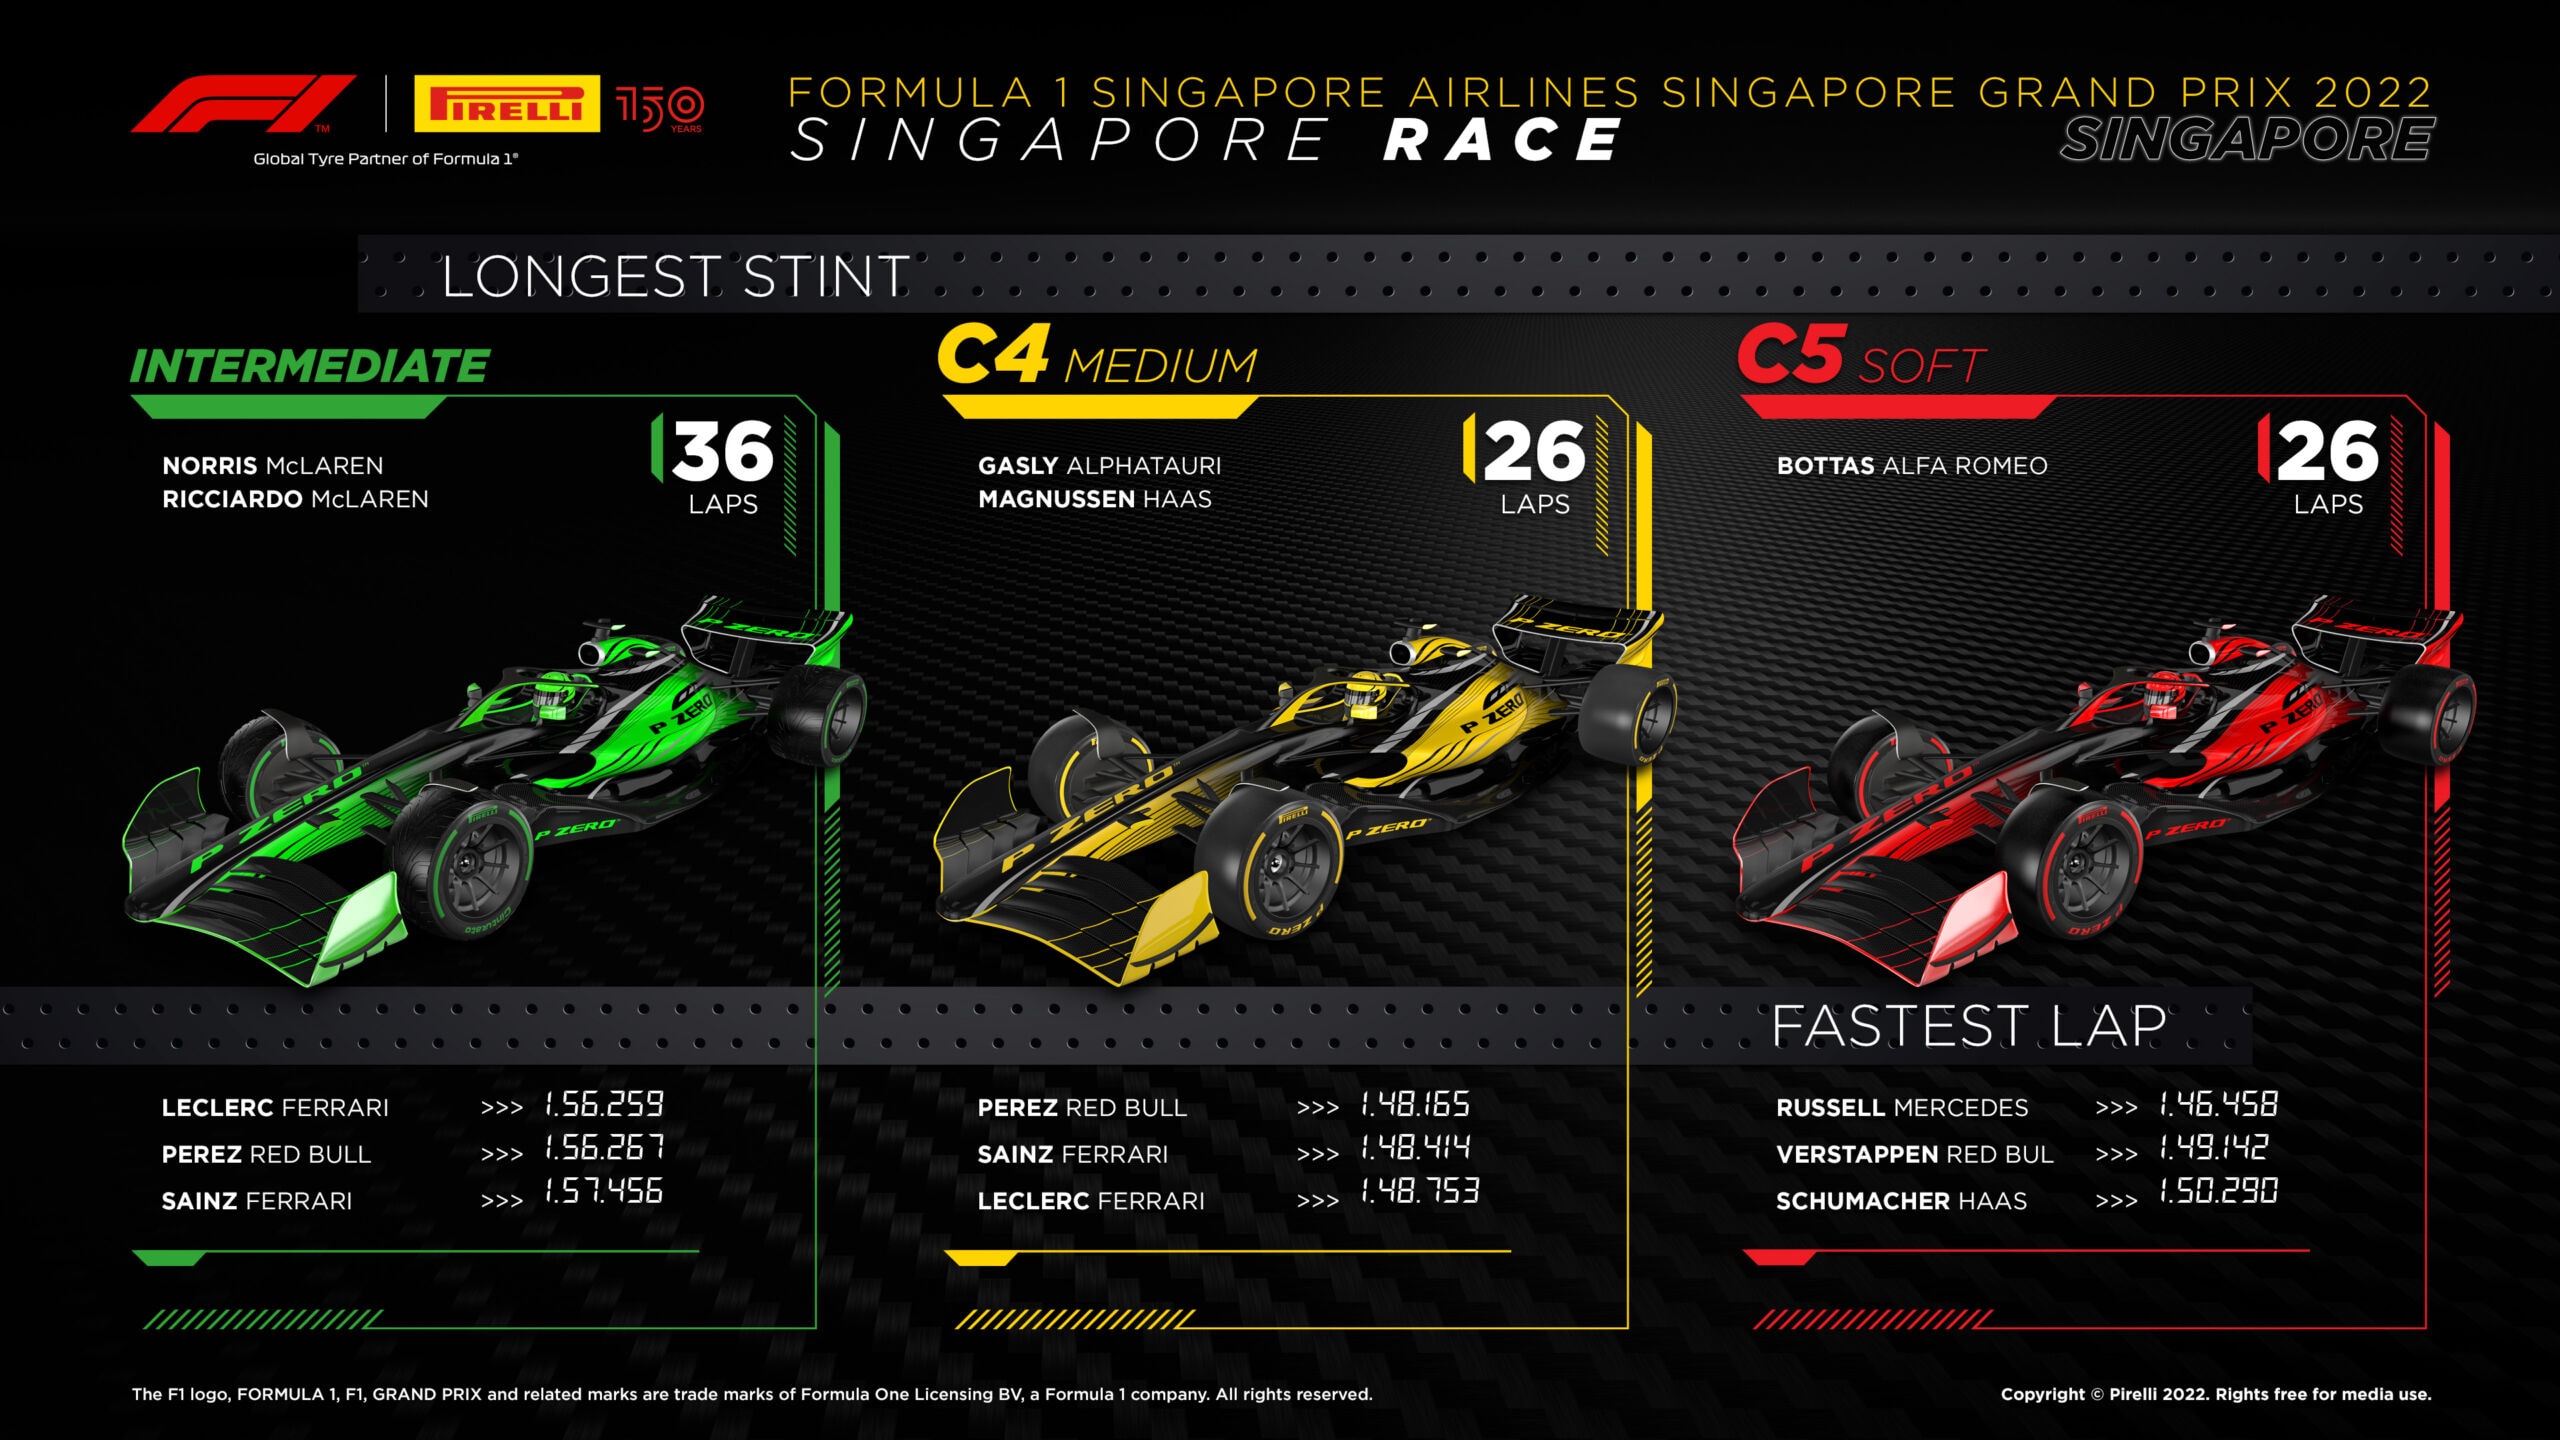 2022 Singapore Grand Prix Tyre Performance Analysis